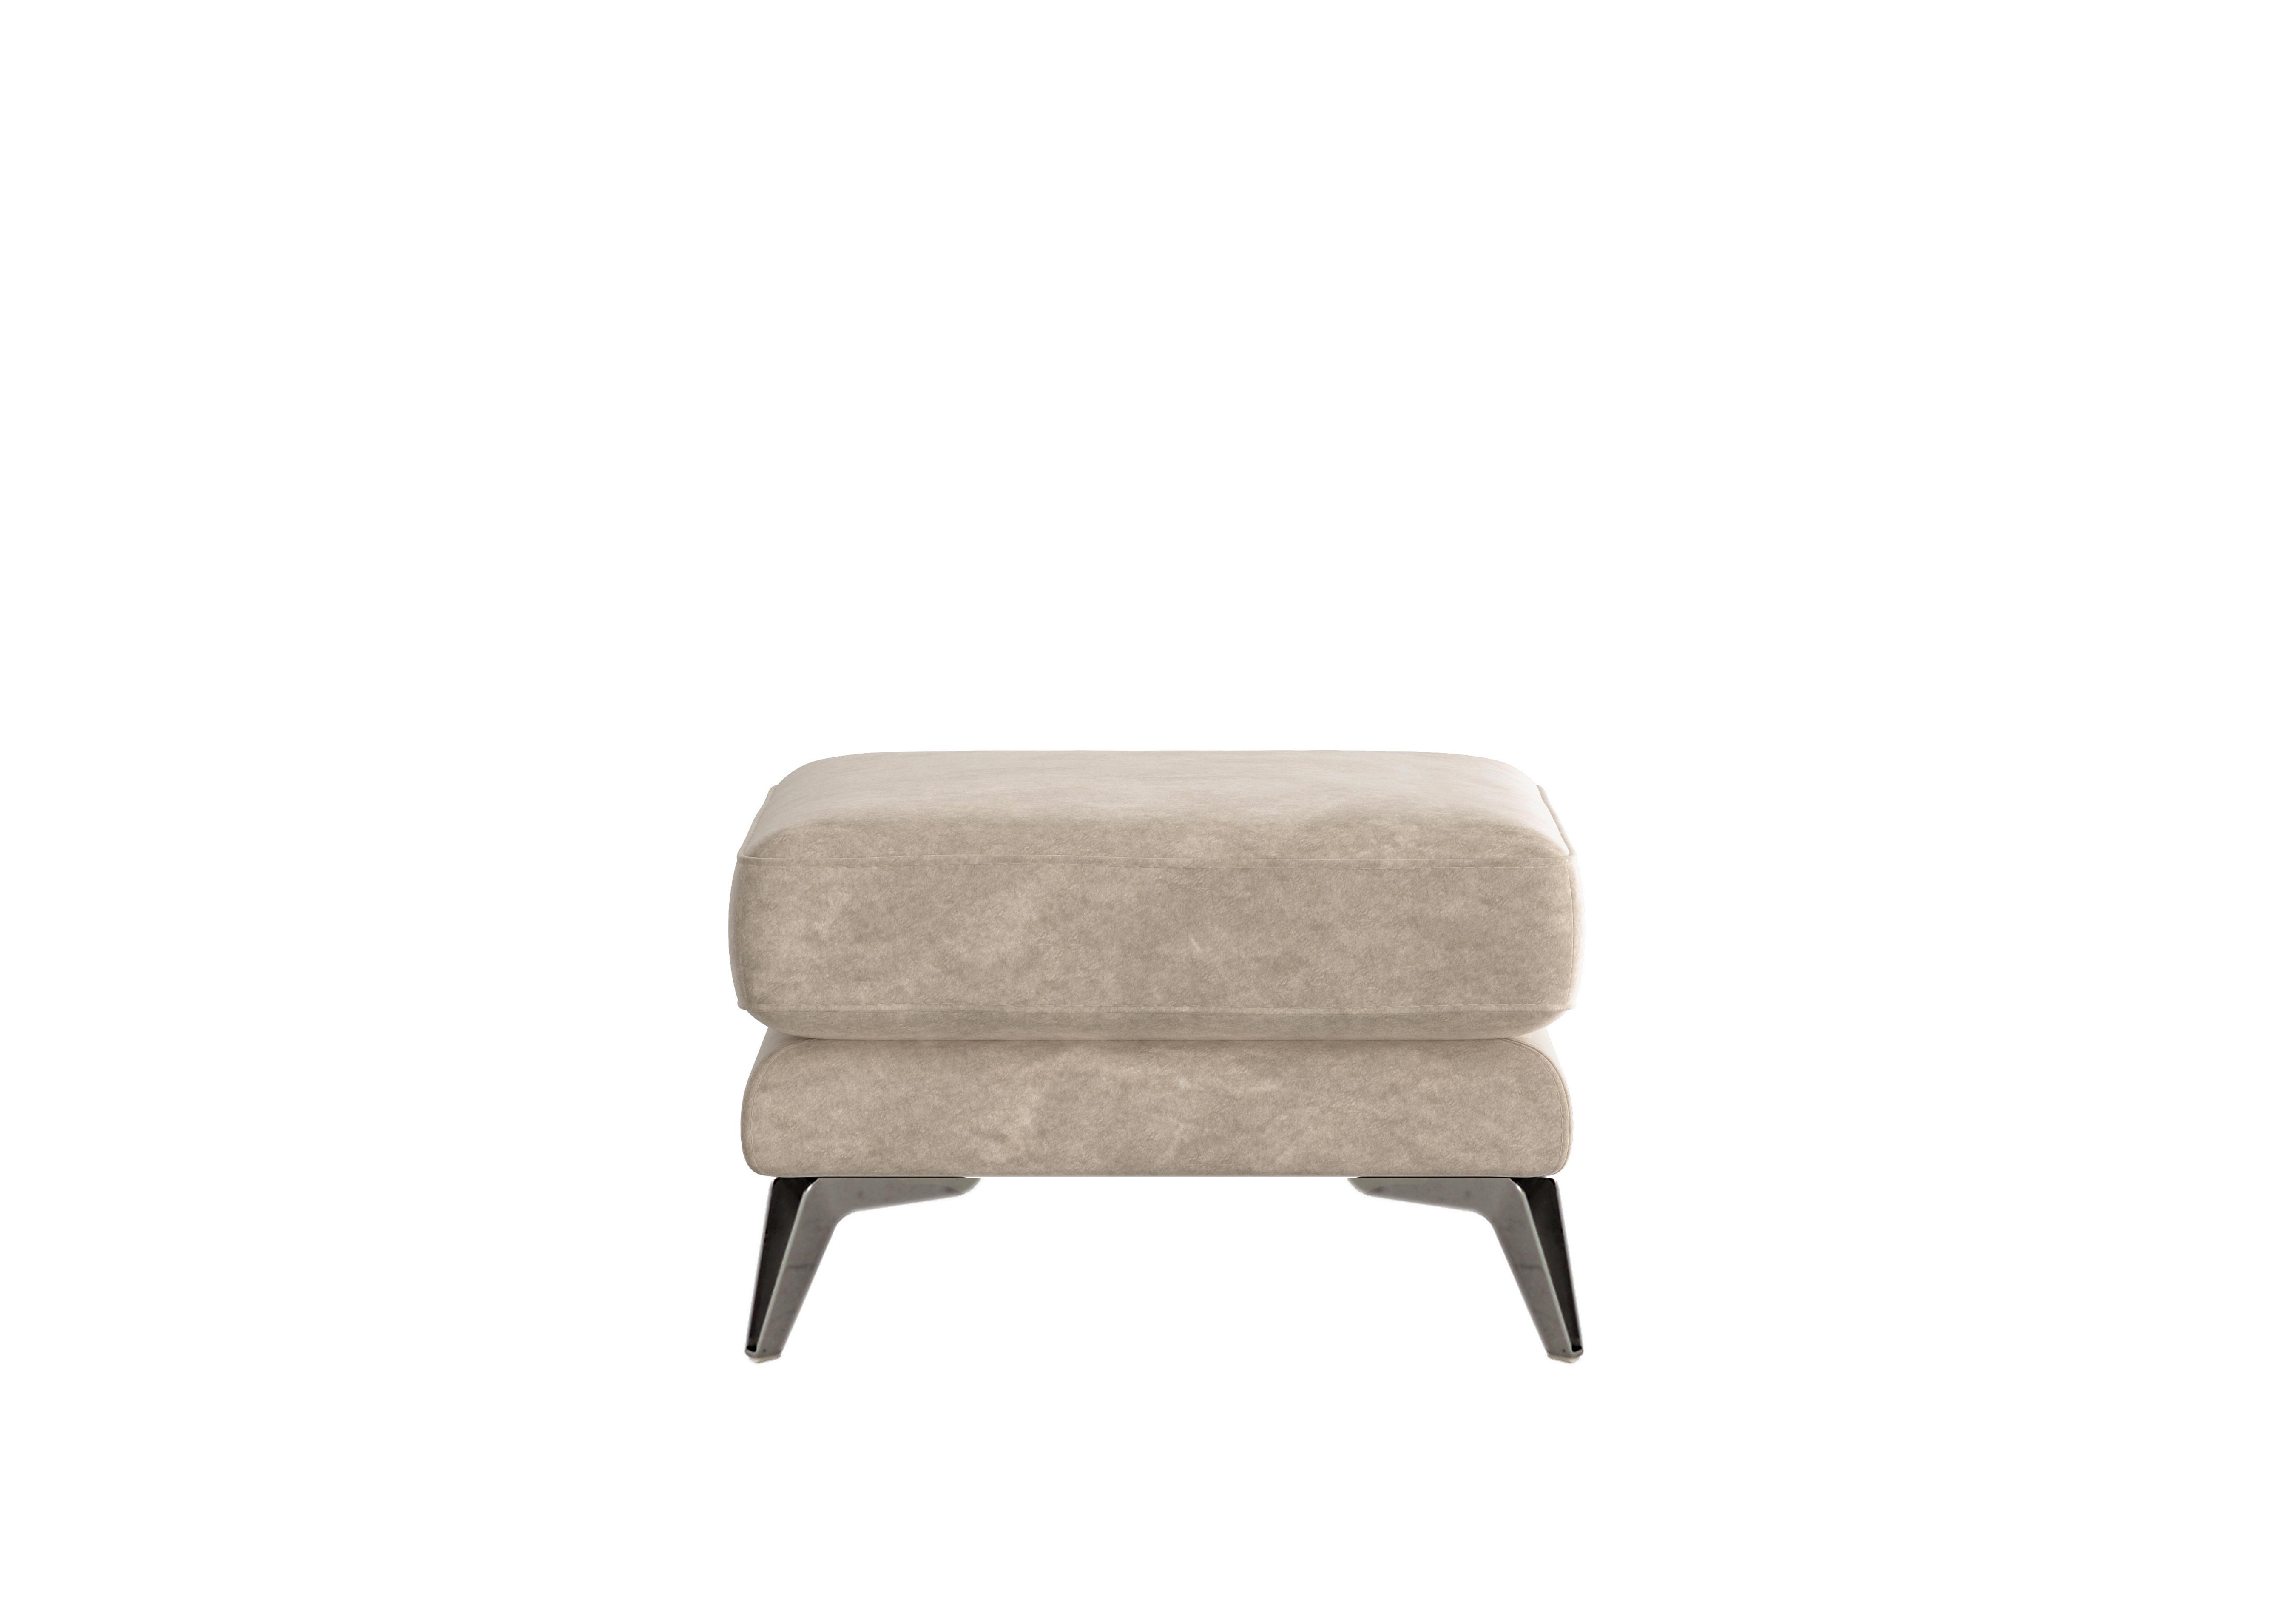 Contempo Fabric Footstool in Bfa-Bnn-R26 Fv2 Cream on Furniture Village